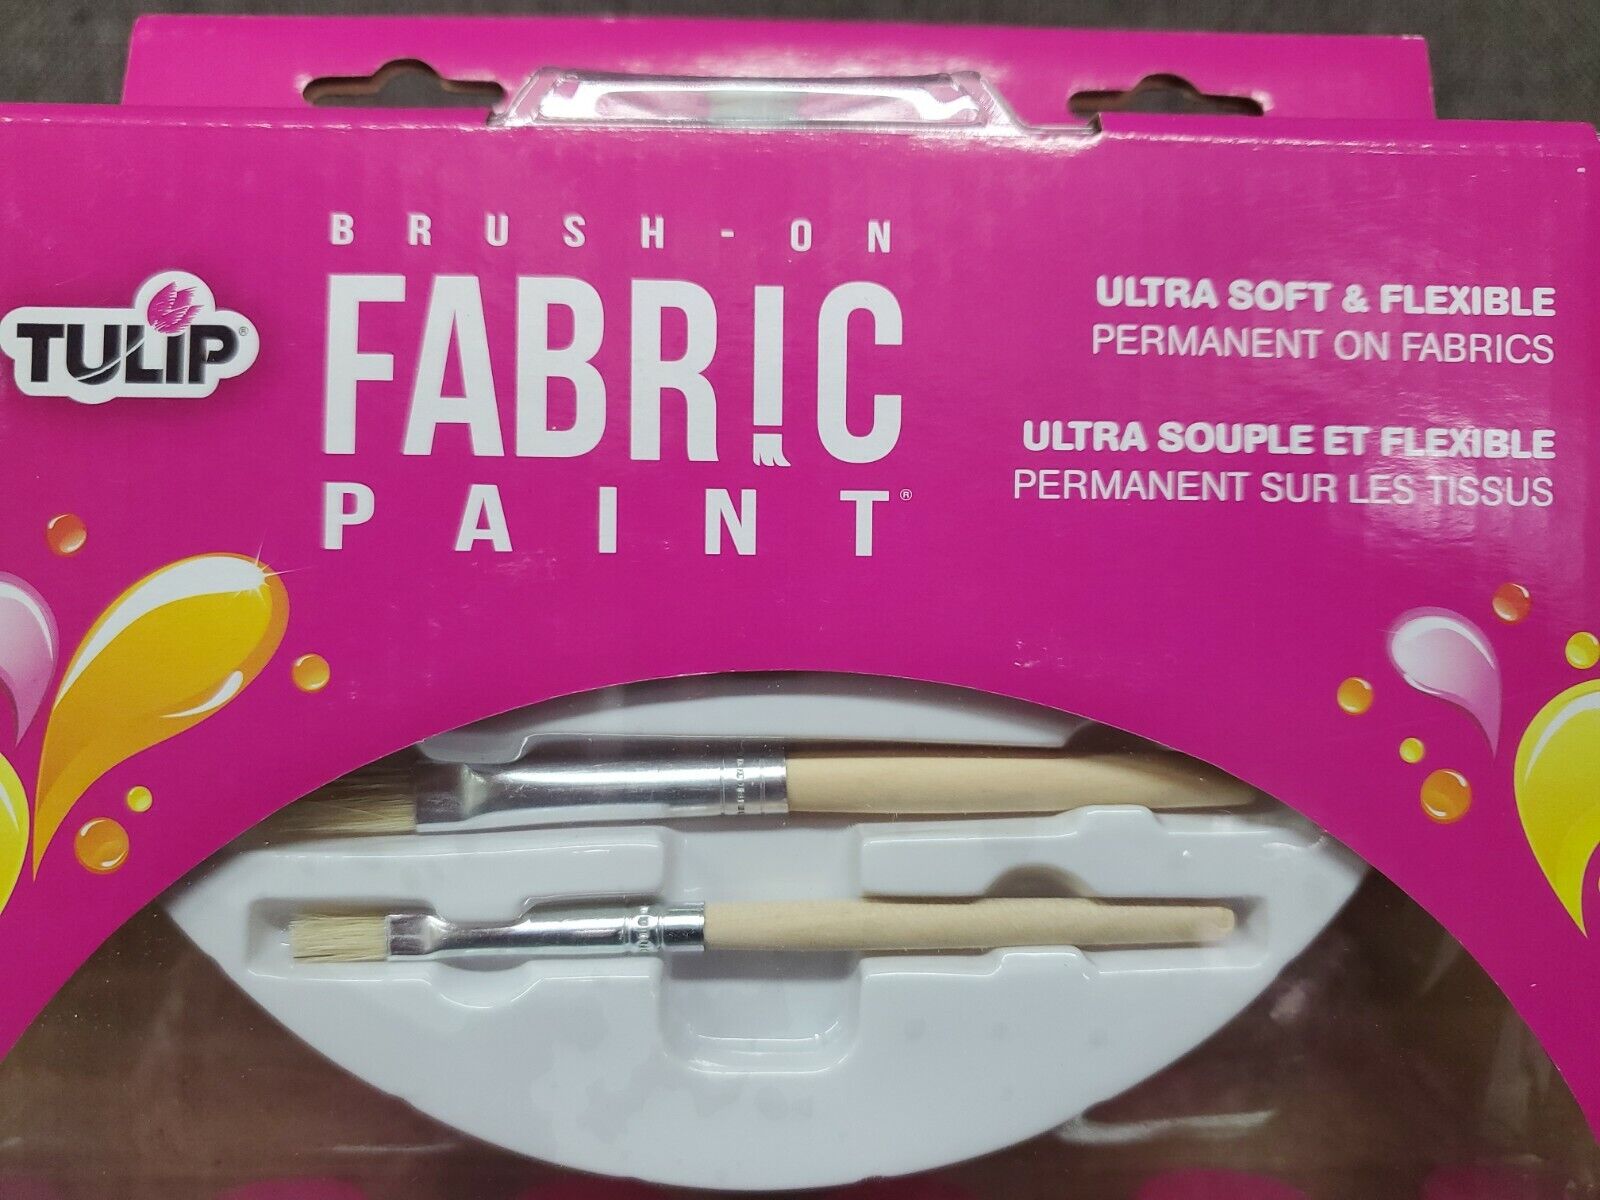 Tulip Brush On Fabric Paint 15 pc Set~ 12 Paints, 2 Brushes, 1 Palette~  NEW! - BND Treasure Chest